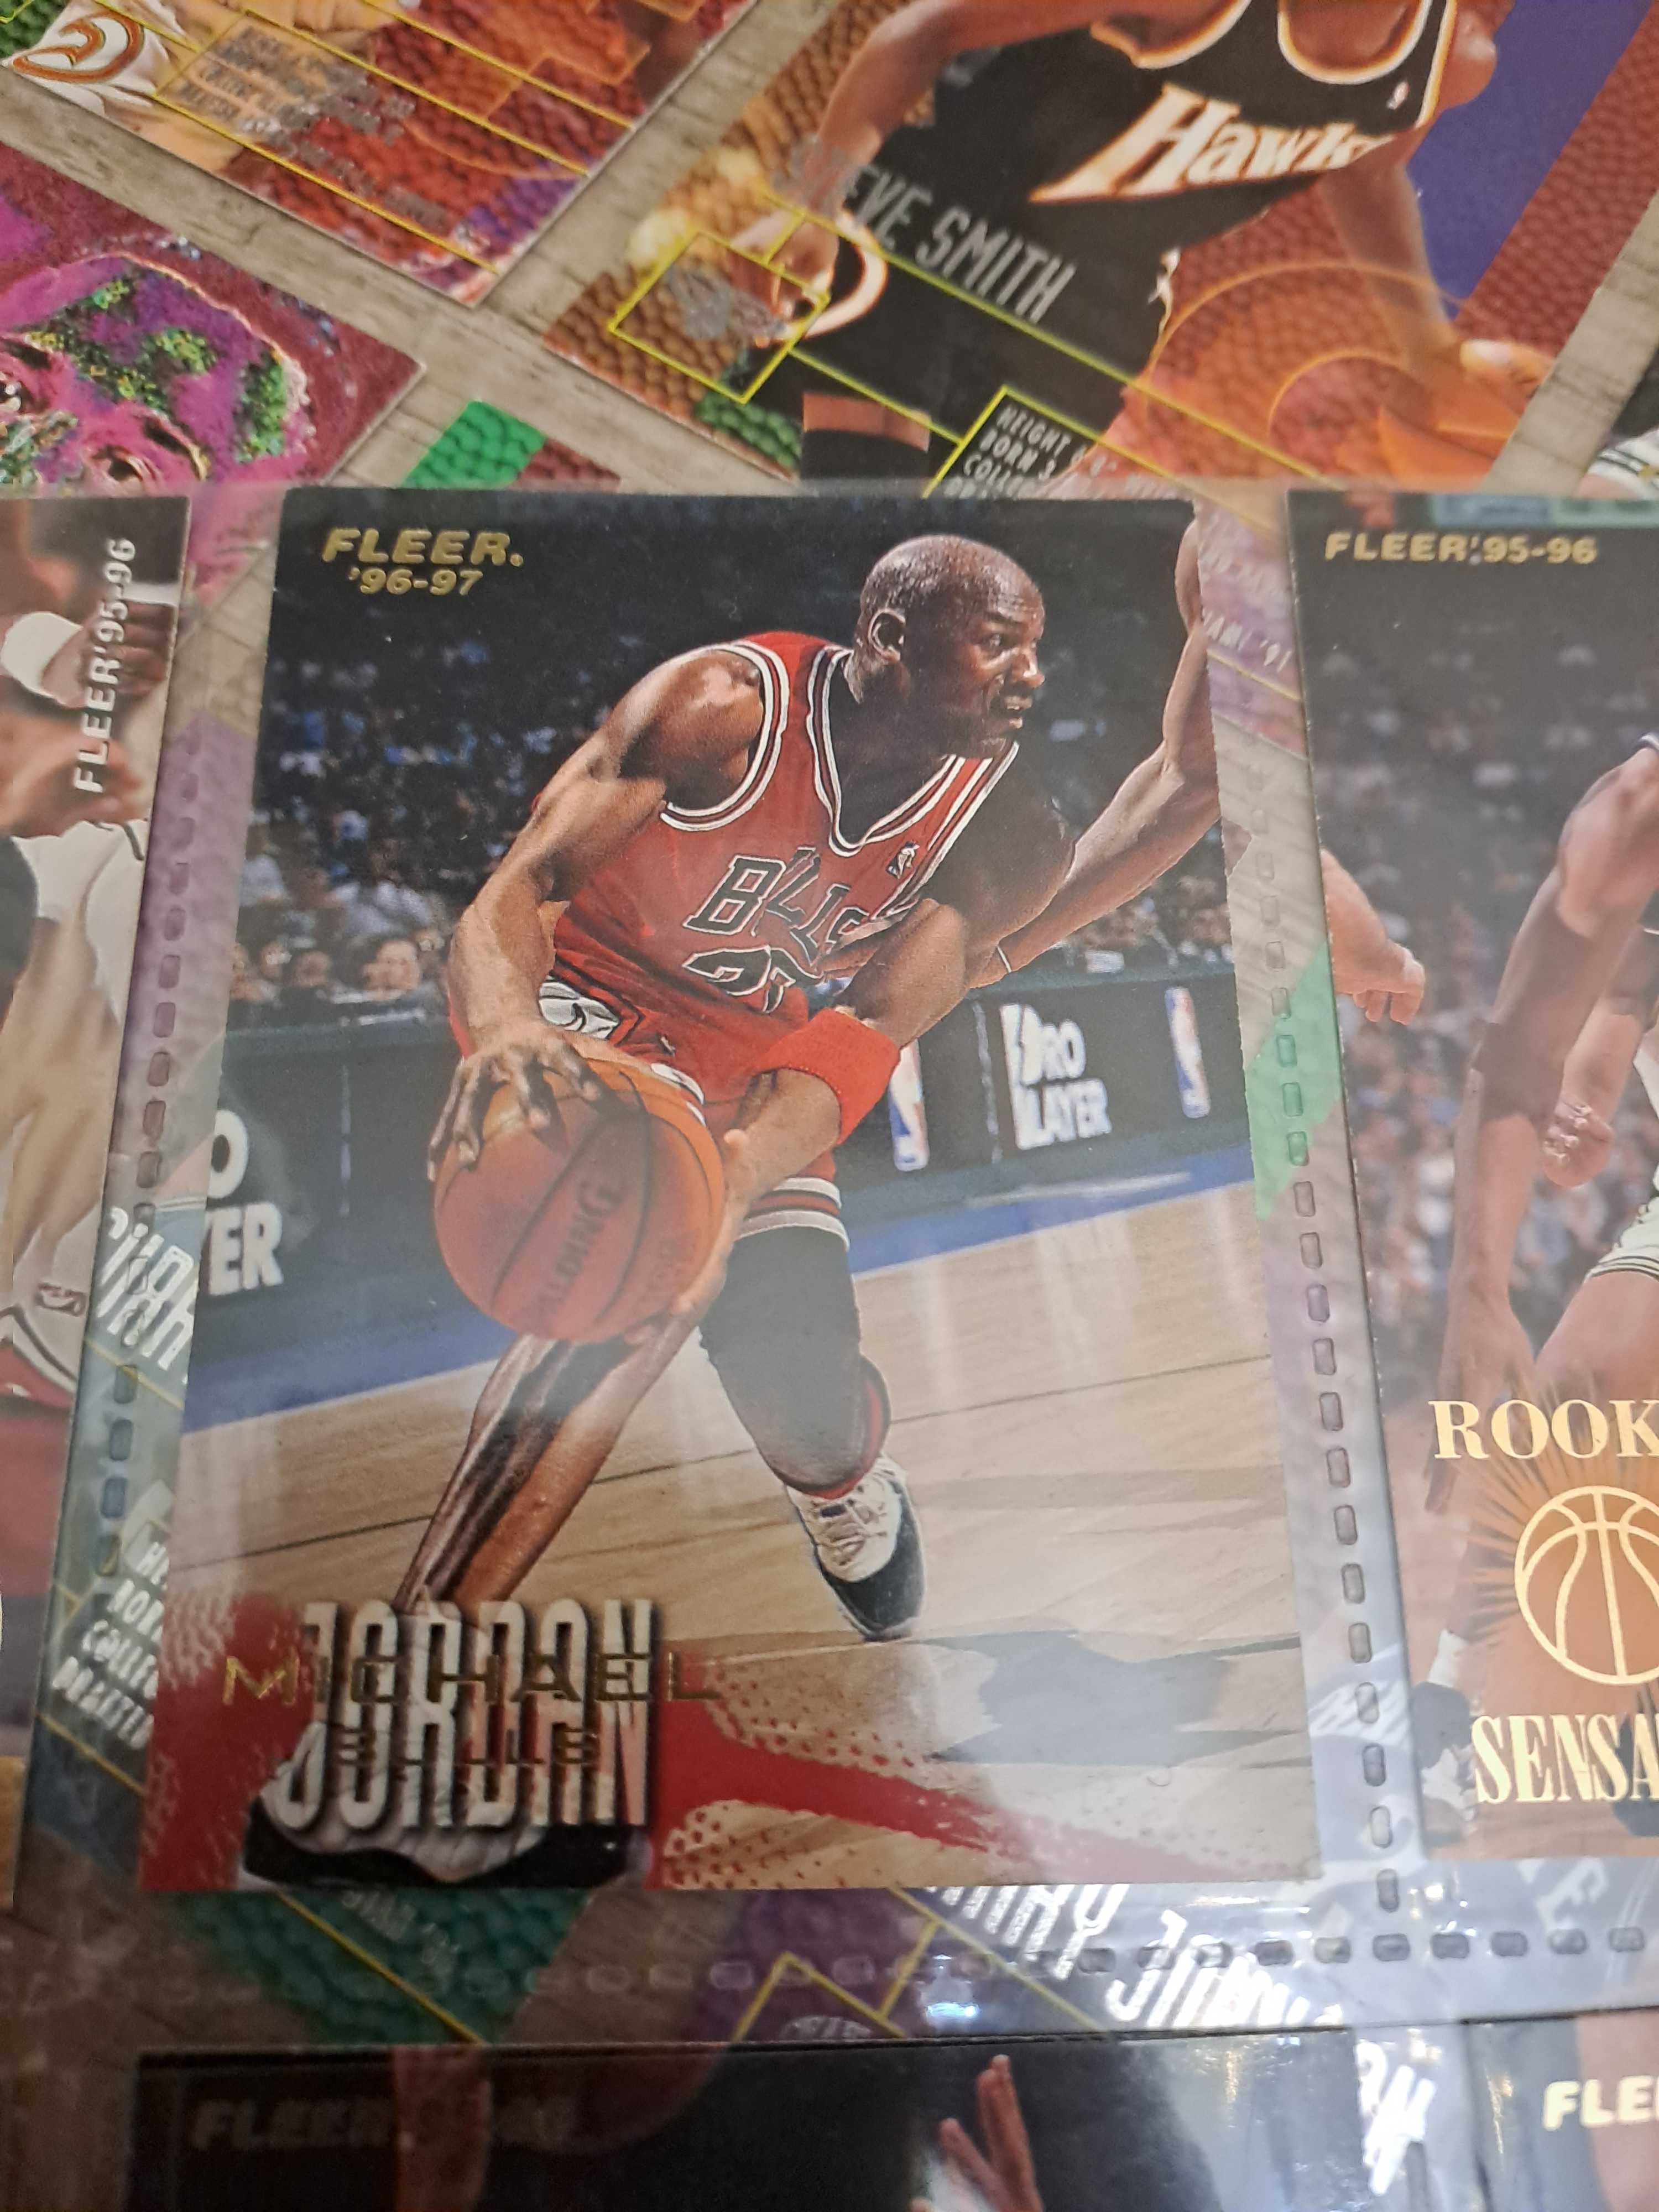 Karty Kolekcjonerskie NBA Fleer 95-96 - 161 szt. kart + gratis